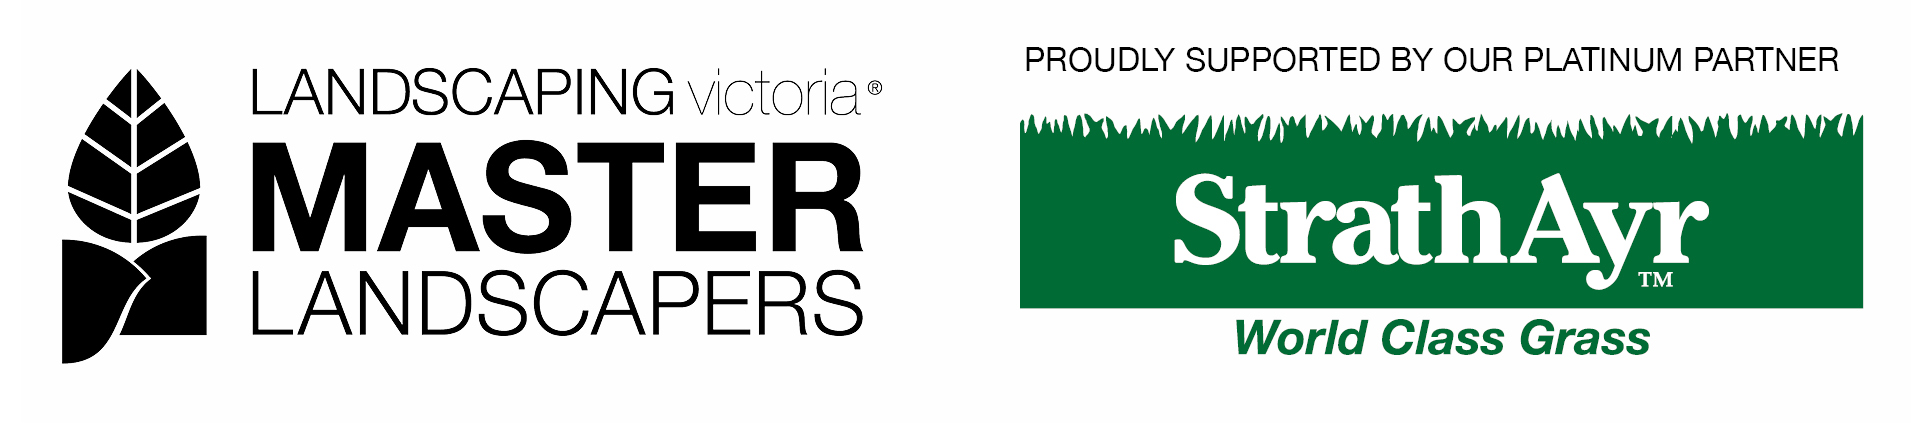 Landscaping Victoria Master Landscapers, Landscape Contractors Association Victoria